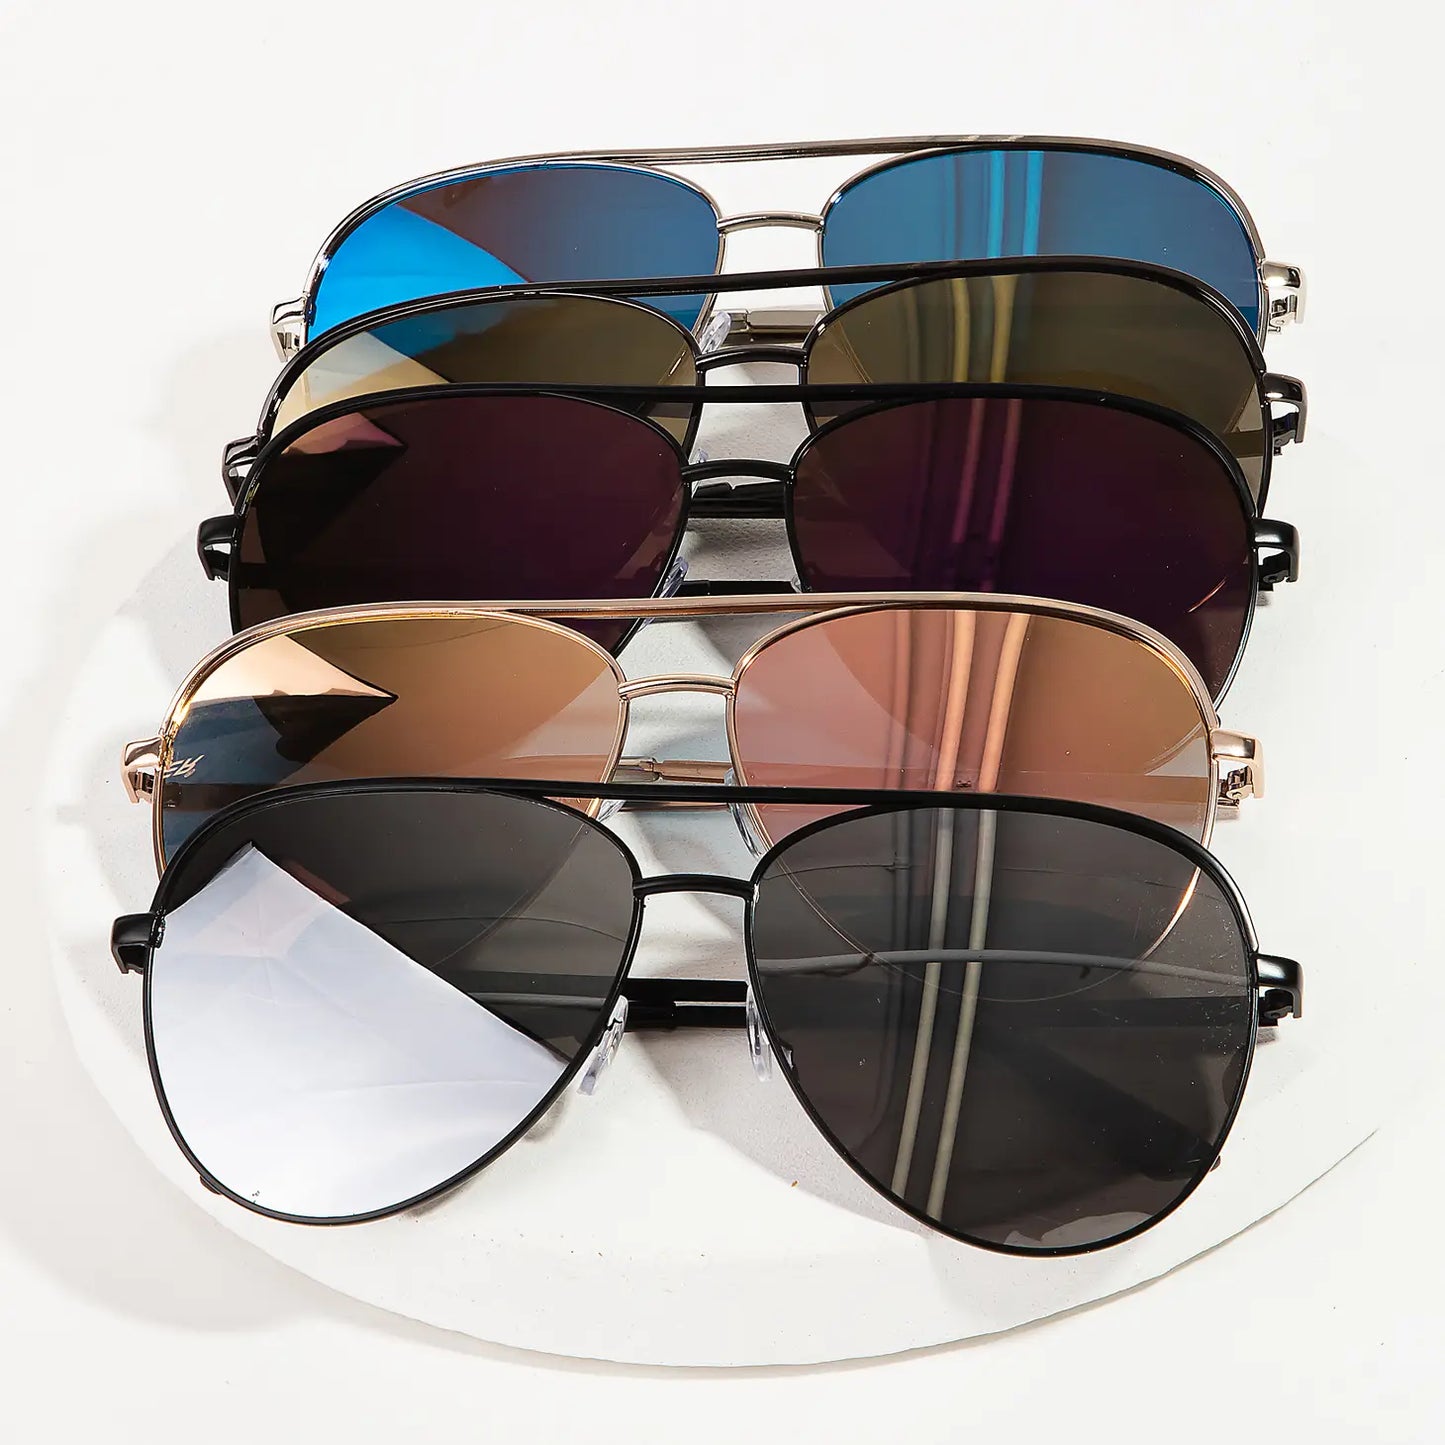 Mirrored Molly Sunglasses (5 colors)